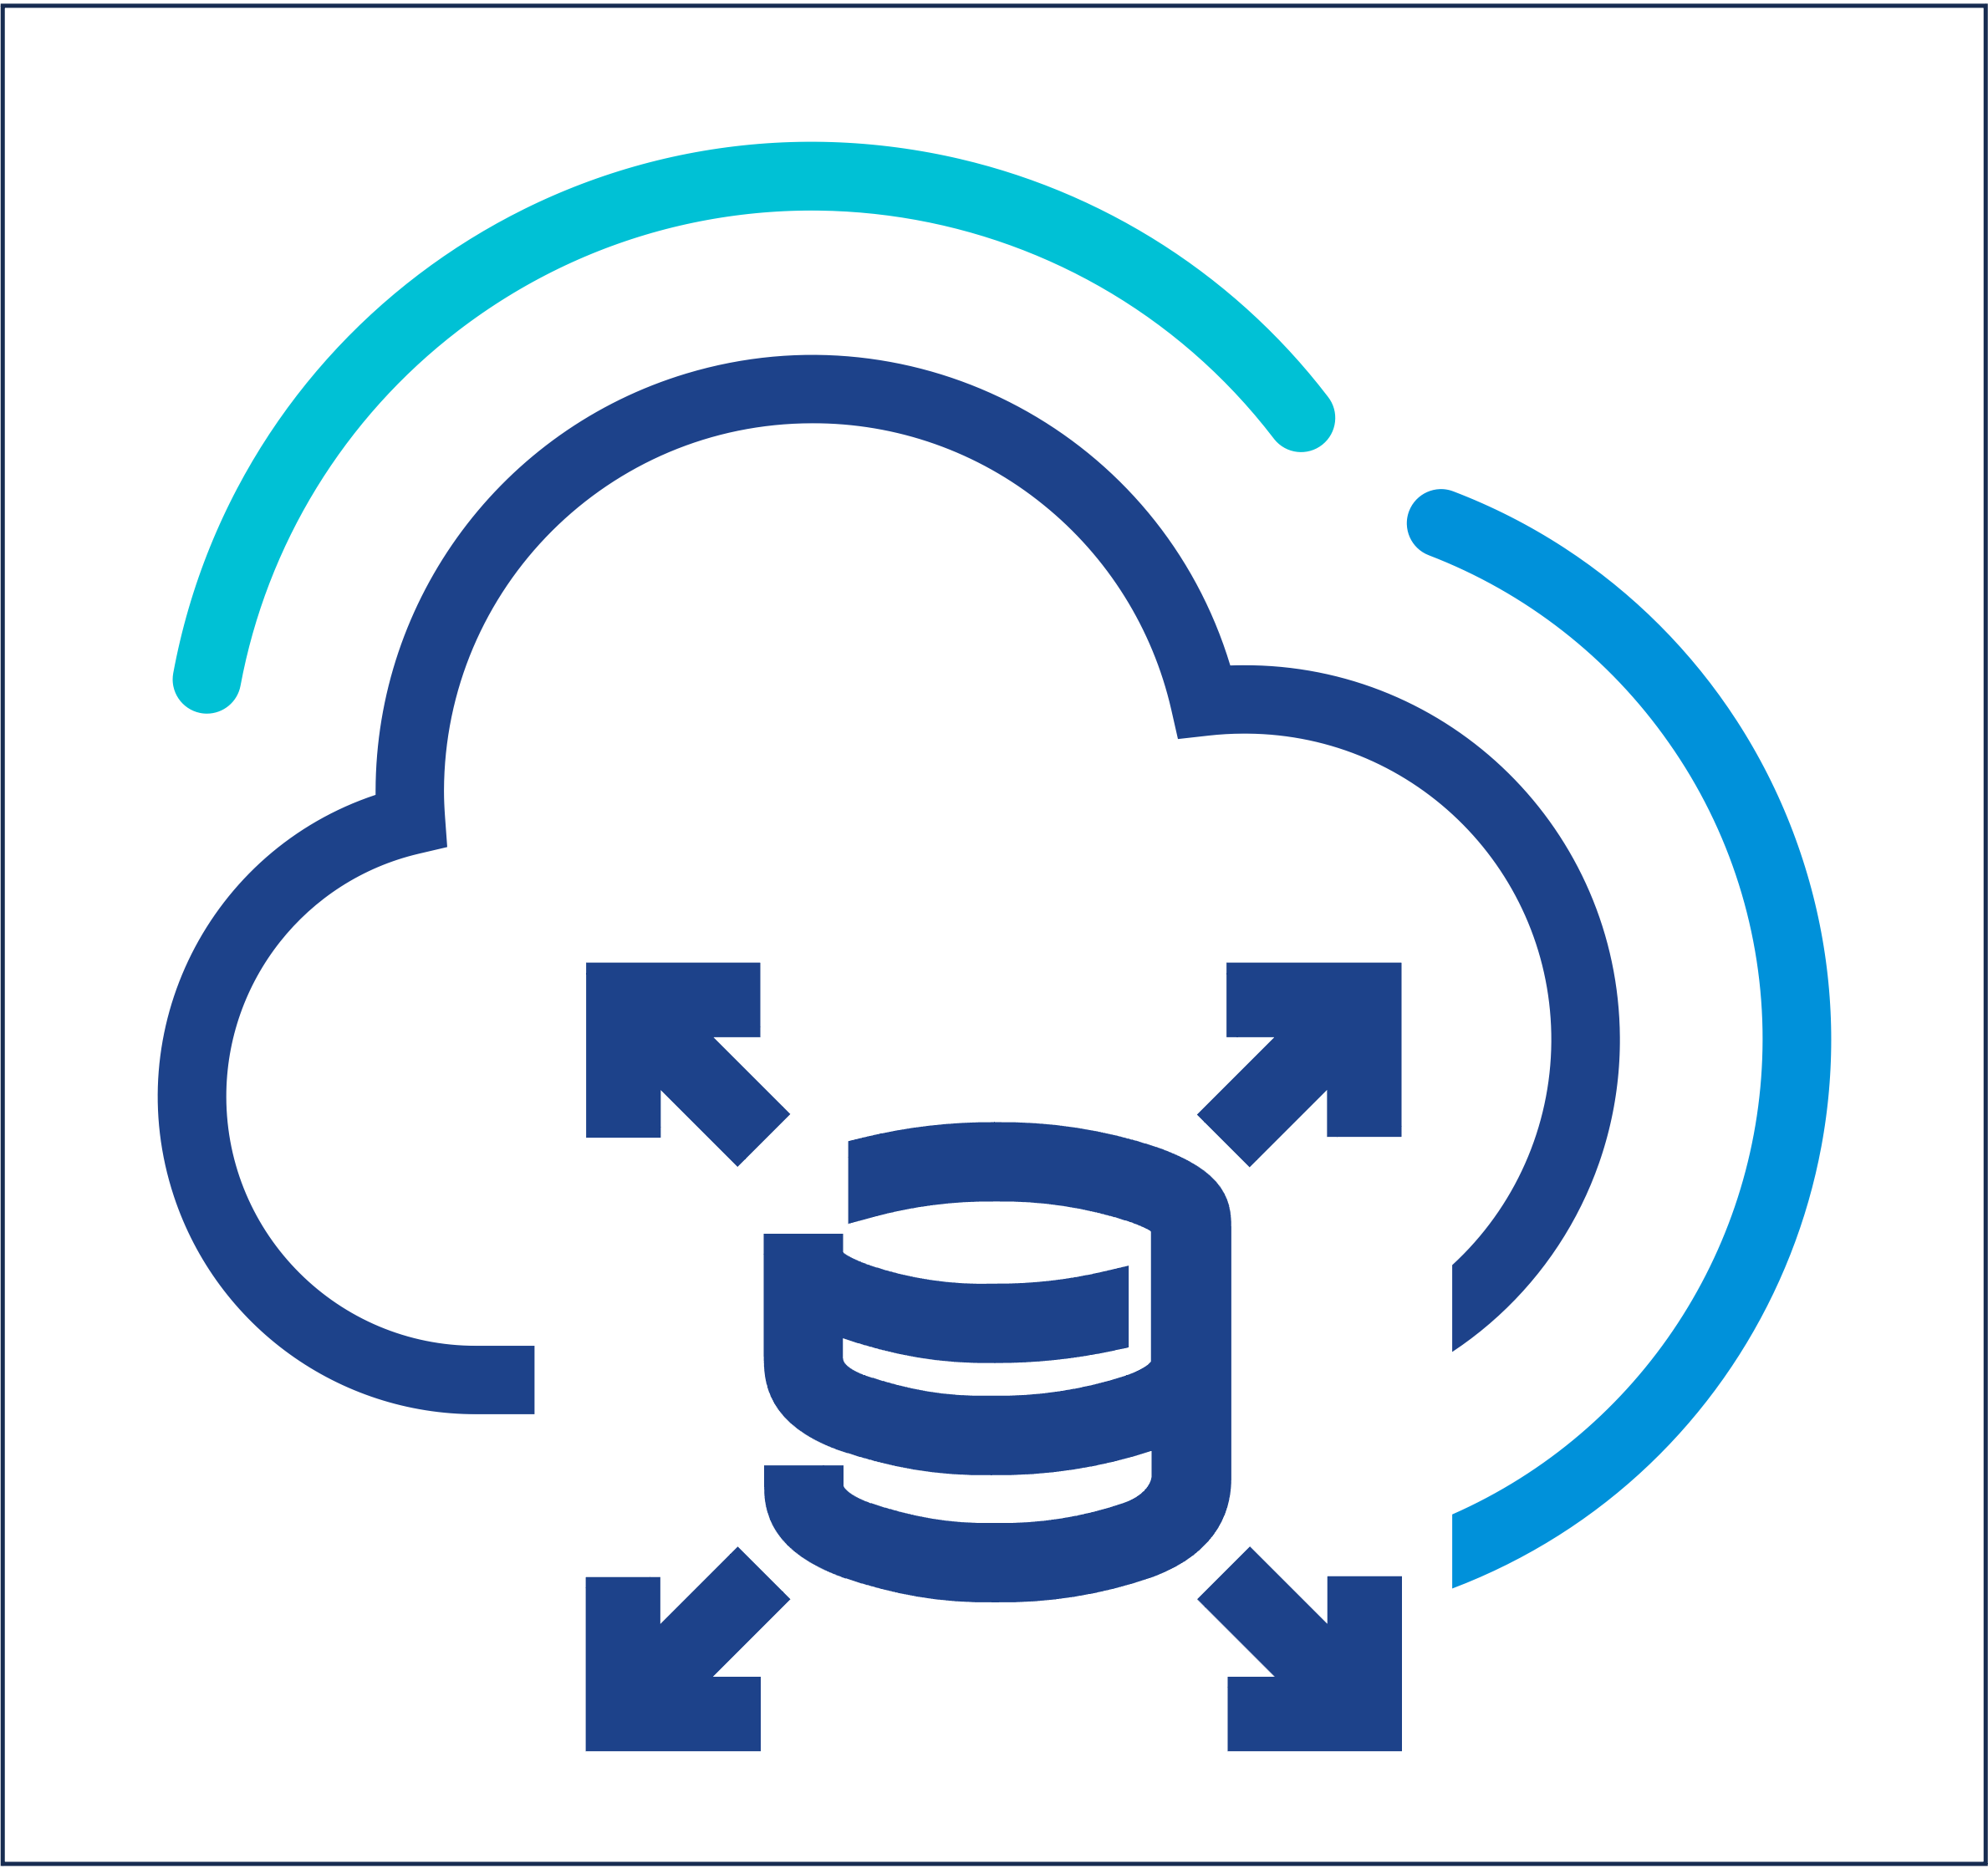 vmware cloud logo